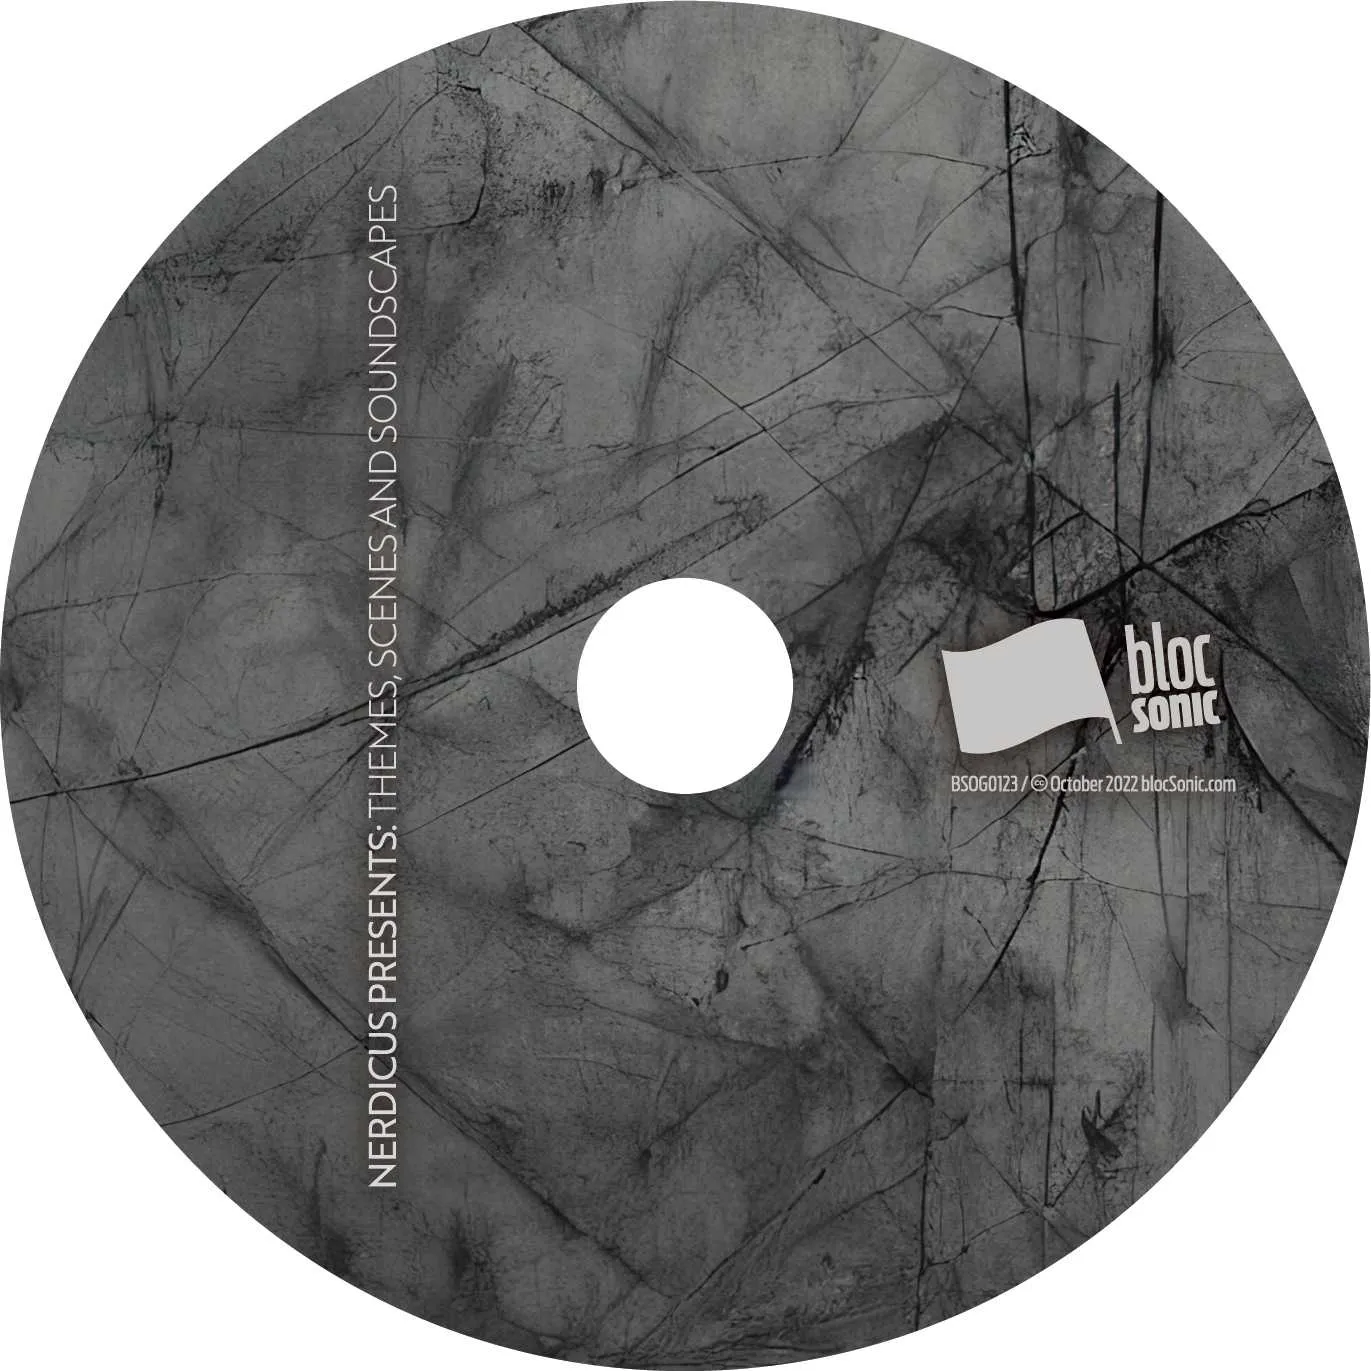 Album disc for “Nerdicus Presents: Themes, Scenes and Soundscapes” by Nerdicus